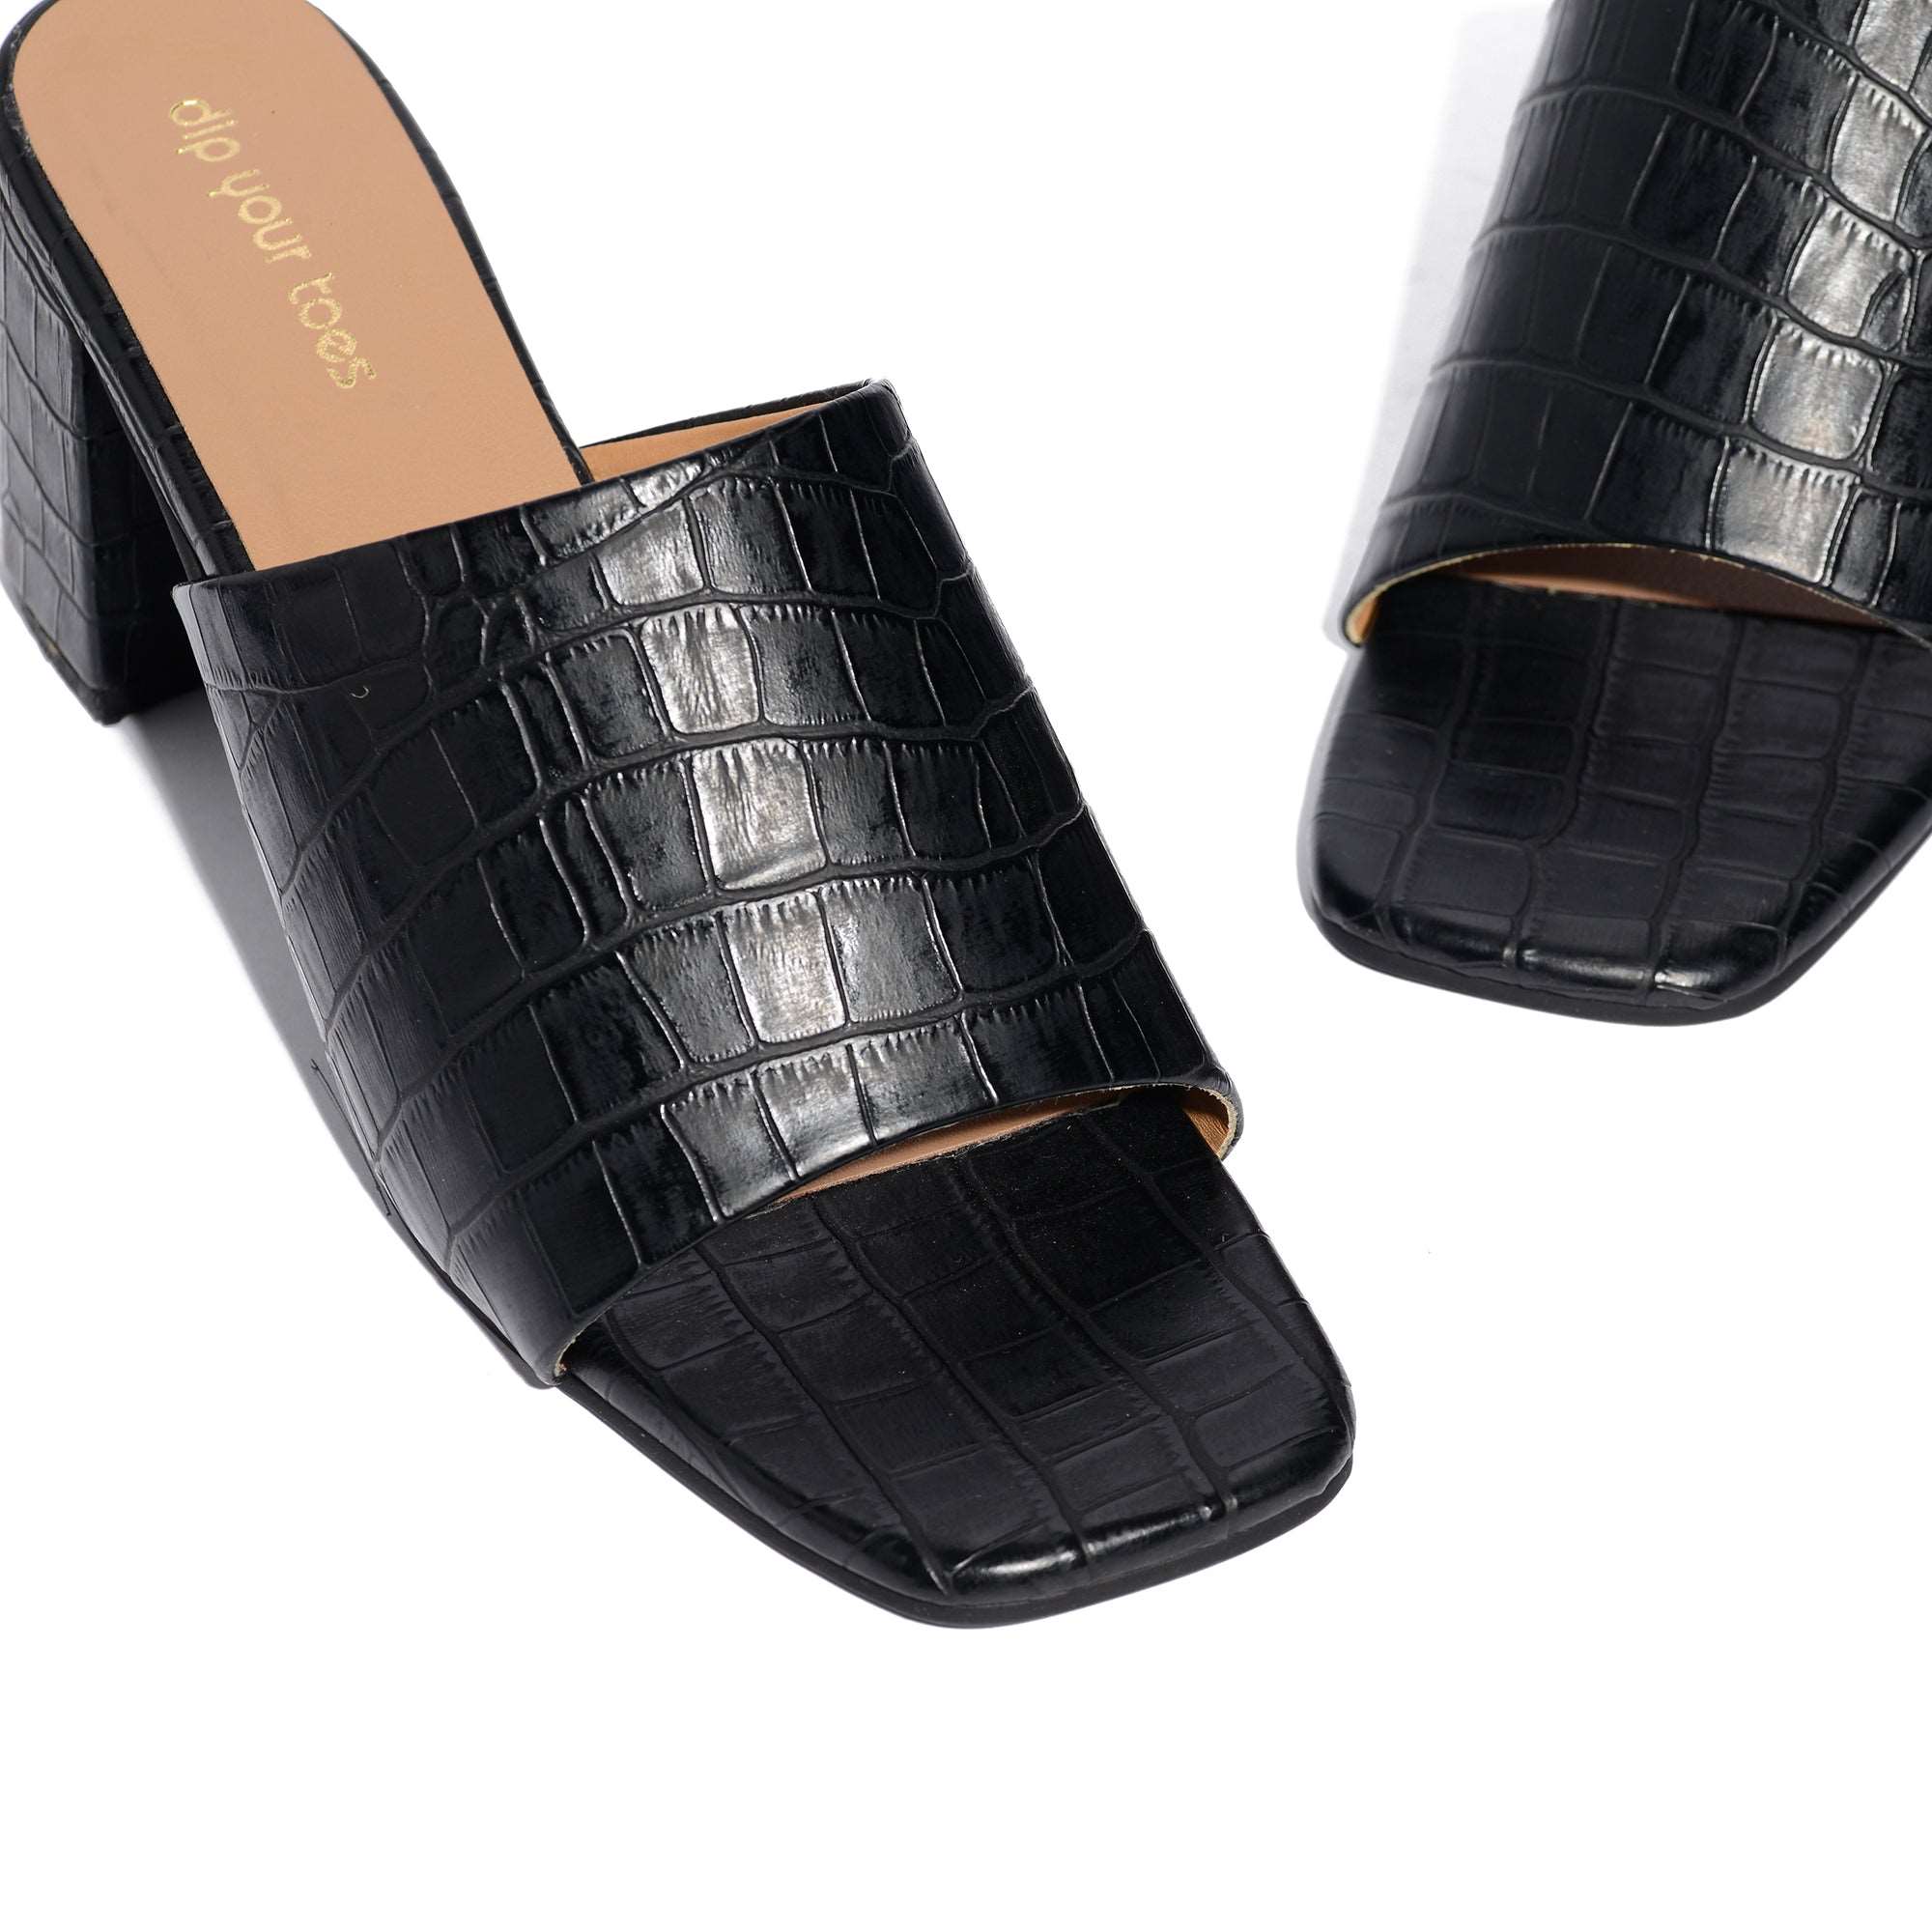 Discover more than 132 black croc sandals